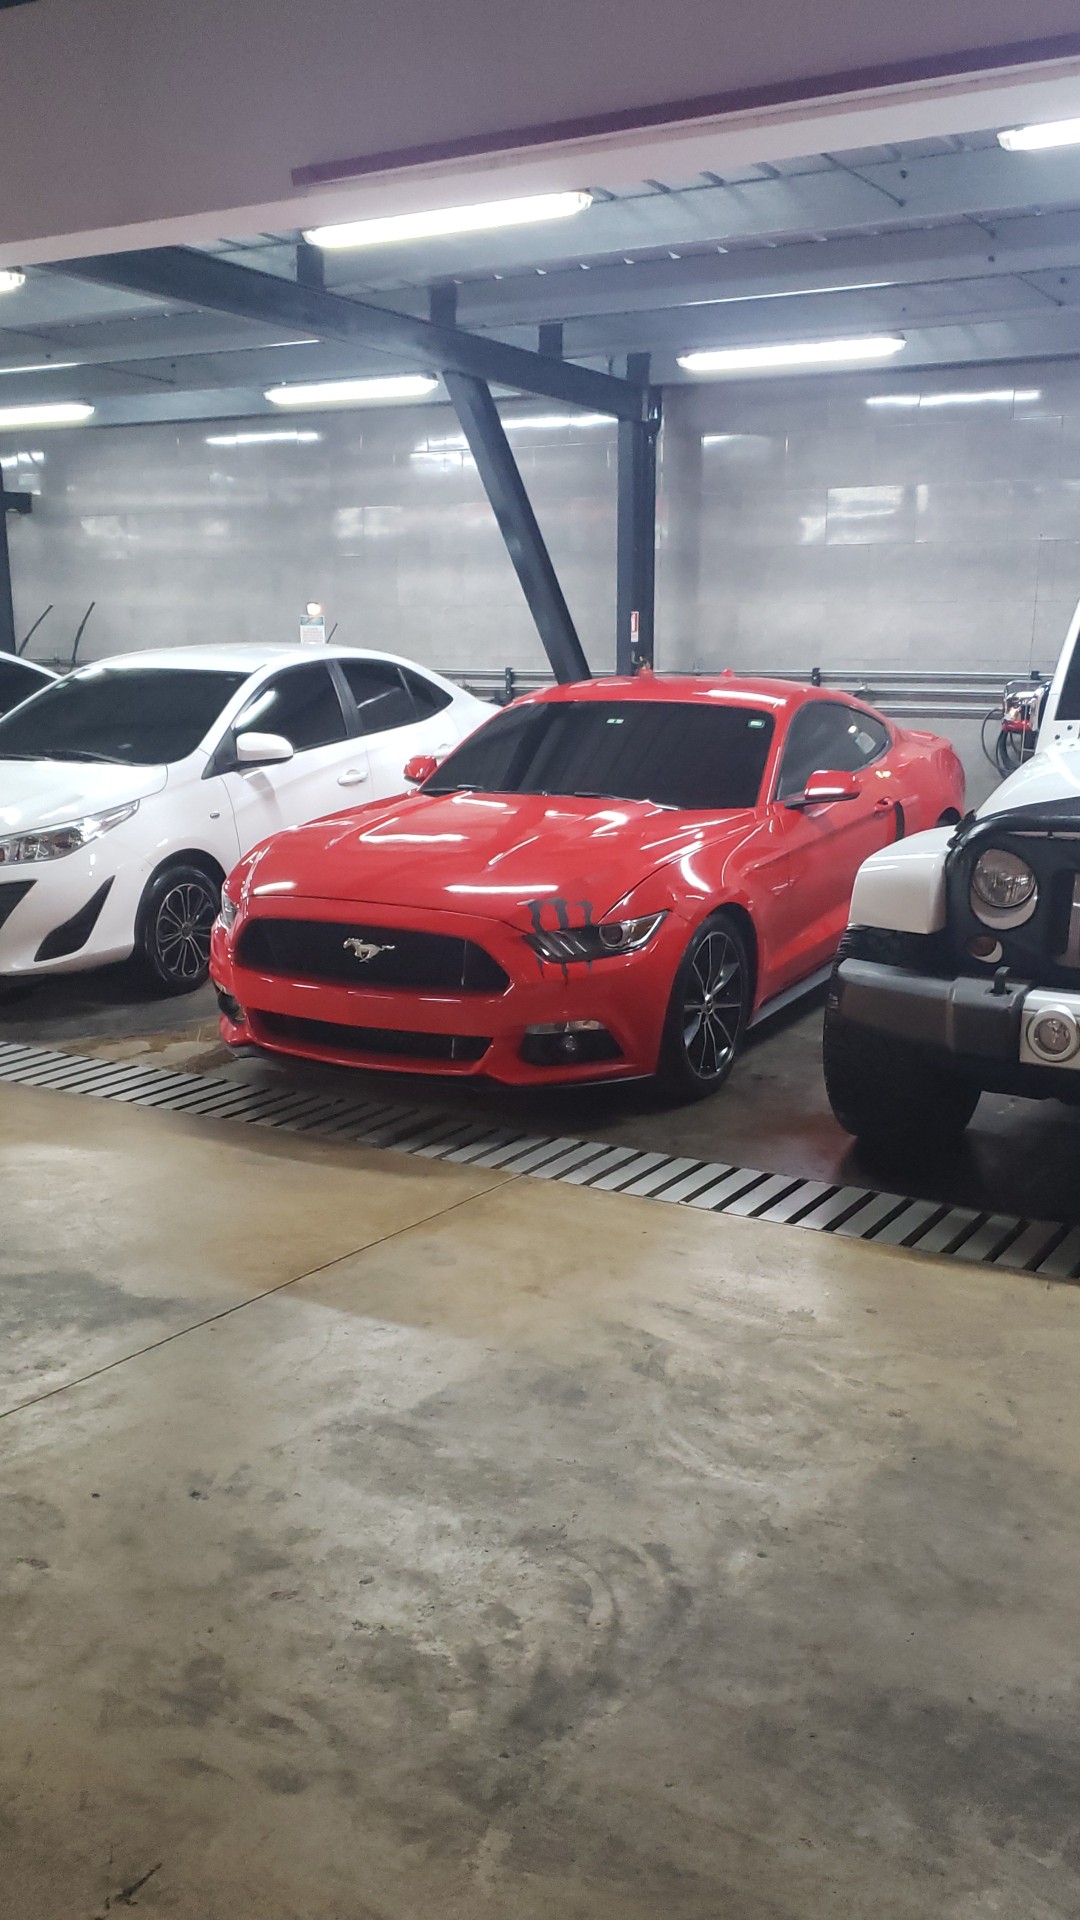 Vendo Ford Mustang 2015 ecobot, 23500 dólares